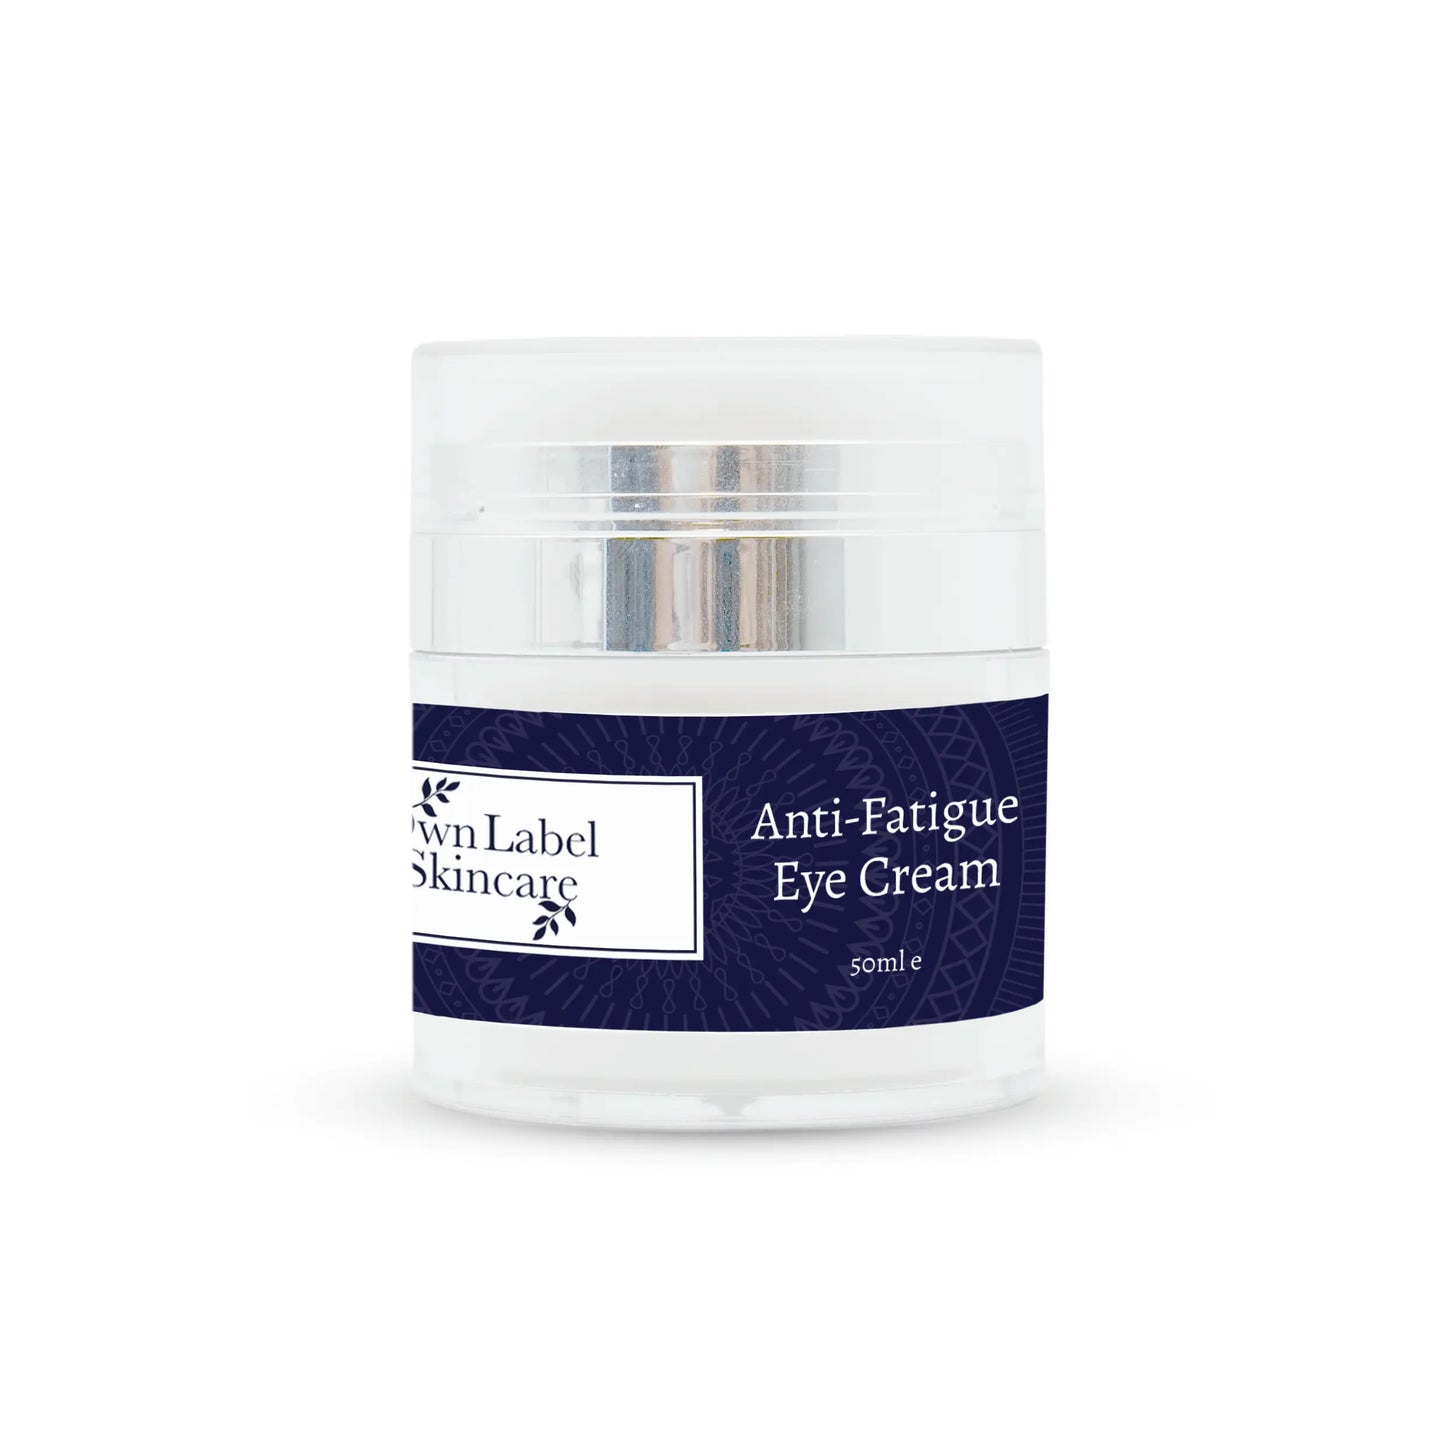 50 ml anti fatigue eye cream | Own Label Skincare